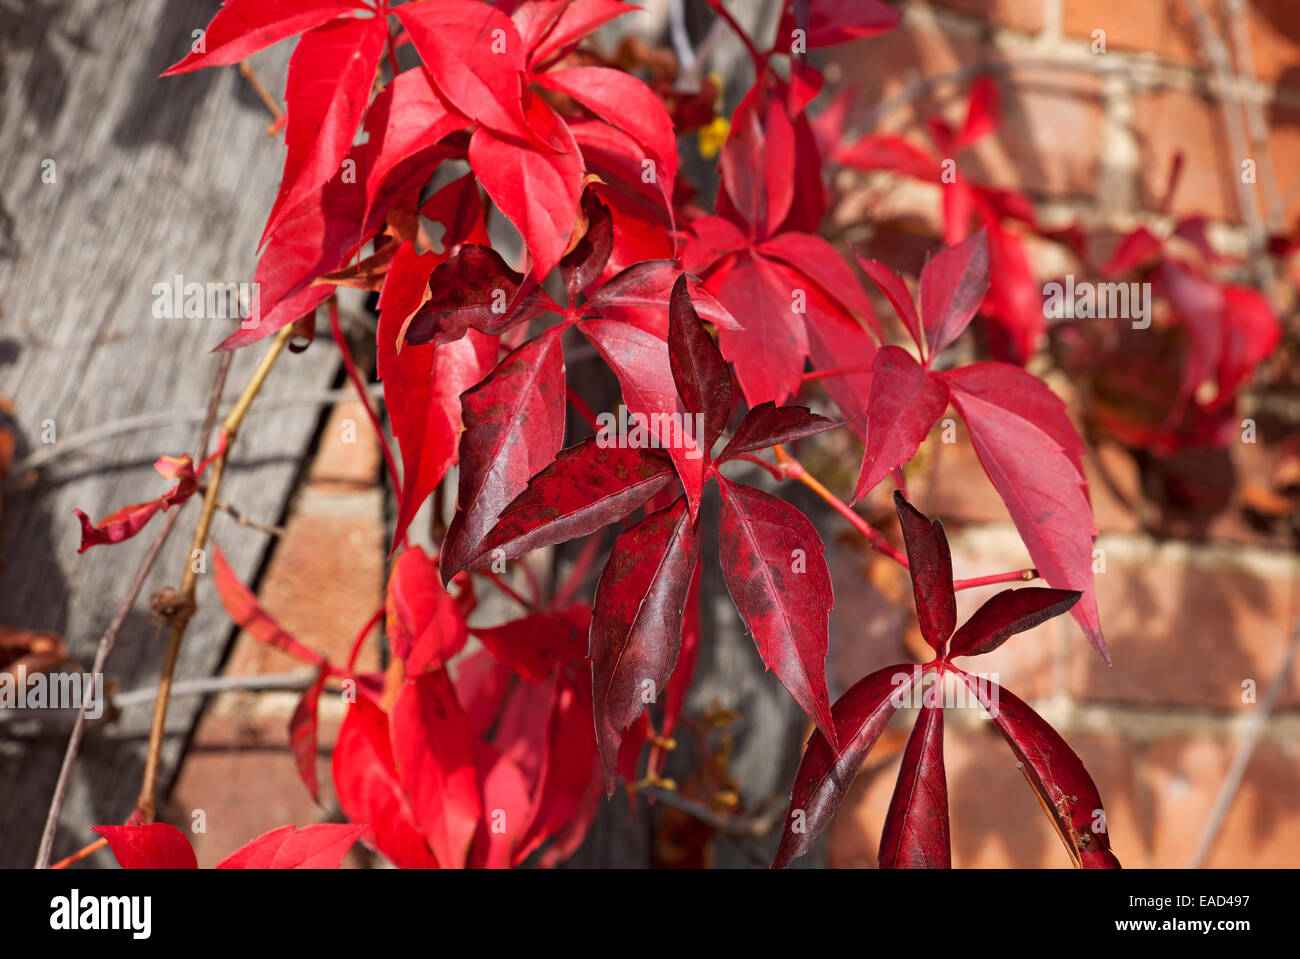 Nahaufnahme des farbenfrohen Virginia Creeper Red Leaf (Parthenocissus quinquefolia) im Herbst England UK Großbritannien Großbritannien Großbritannien Großbritannien Stockfoto